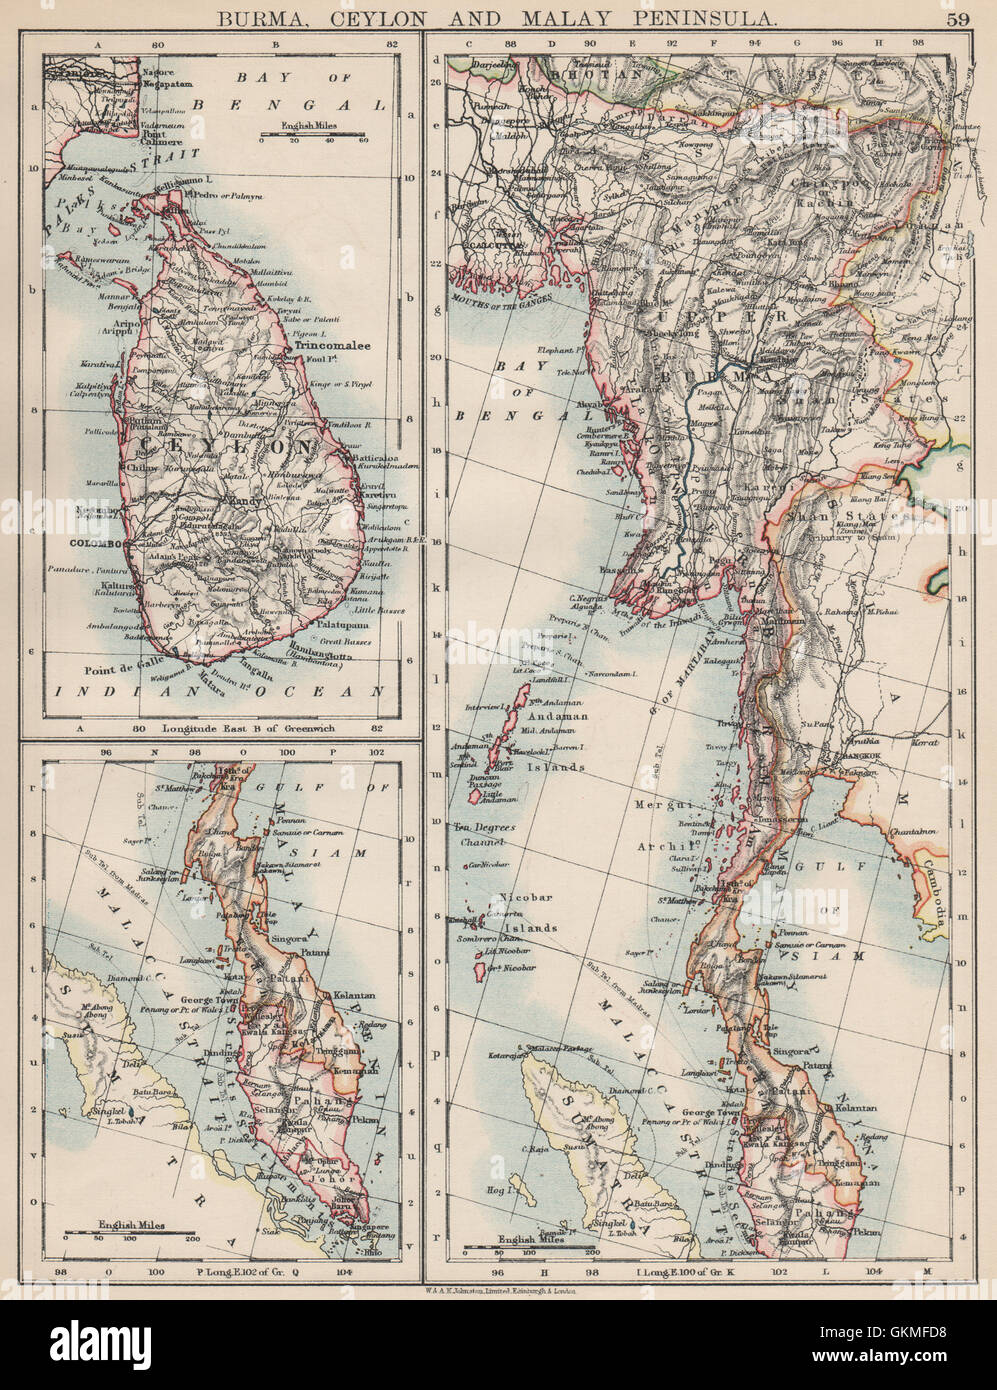 BURMA CEYLON SIAM MALAY PENINSULA. Assam Singapore Thailand, 1903 antique map Stock Photo